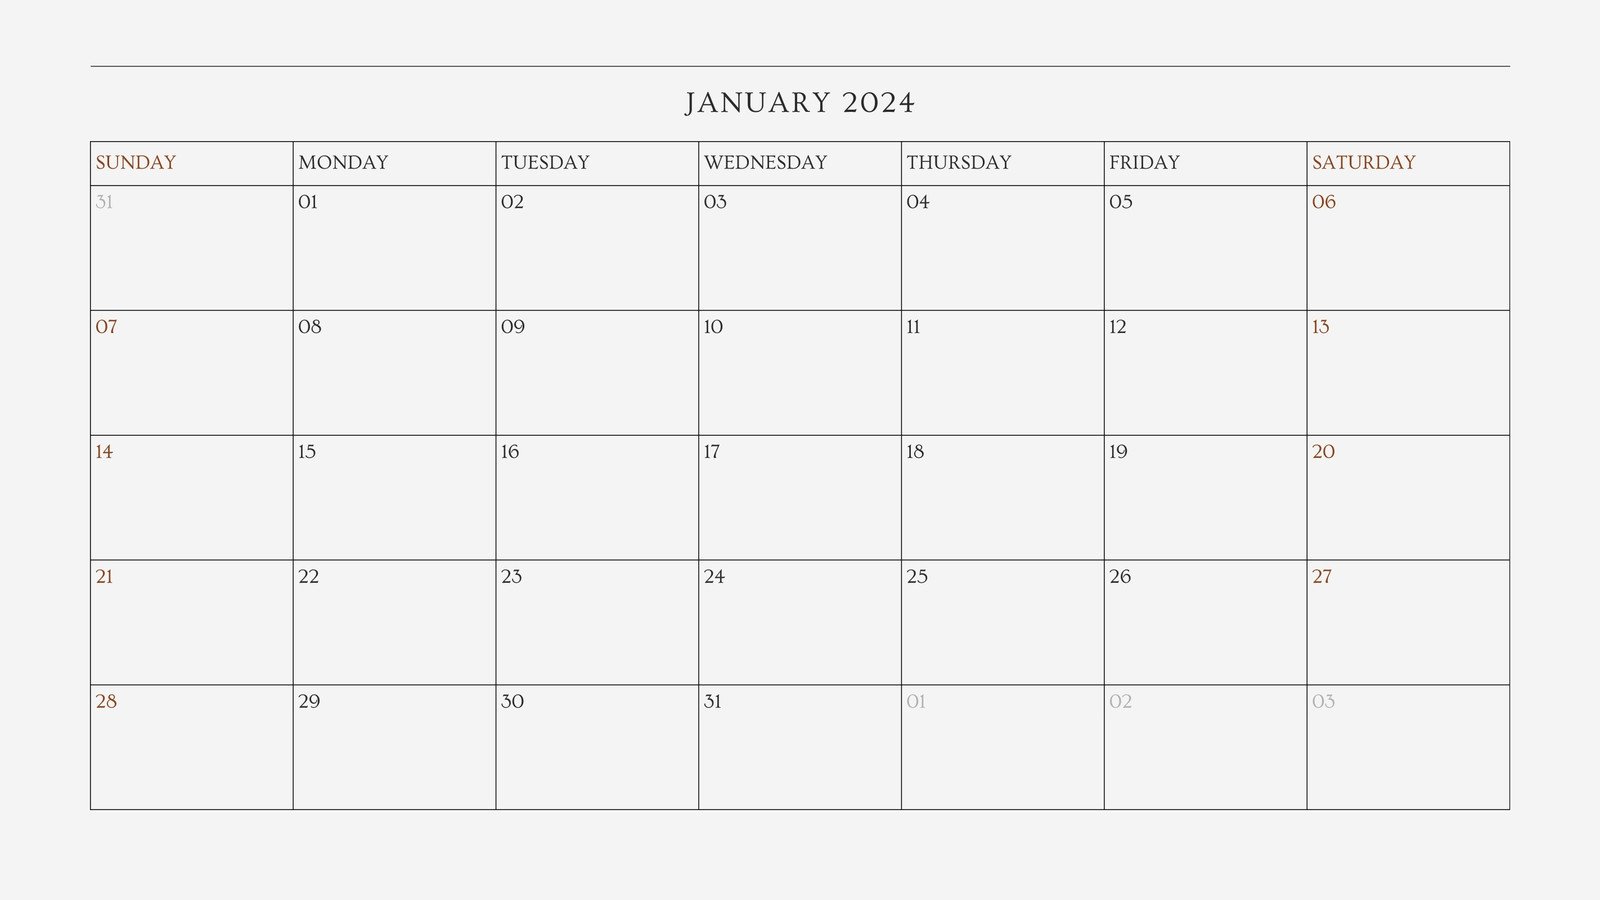 https://marketplace.canva.com/EAF3V2yGA6c/1/0/1600w/canva-white-simple-minimalist-january-2024-monthly-calendar-zLovC1p1sUA.jpg